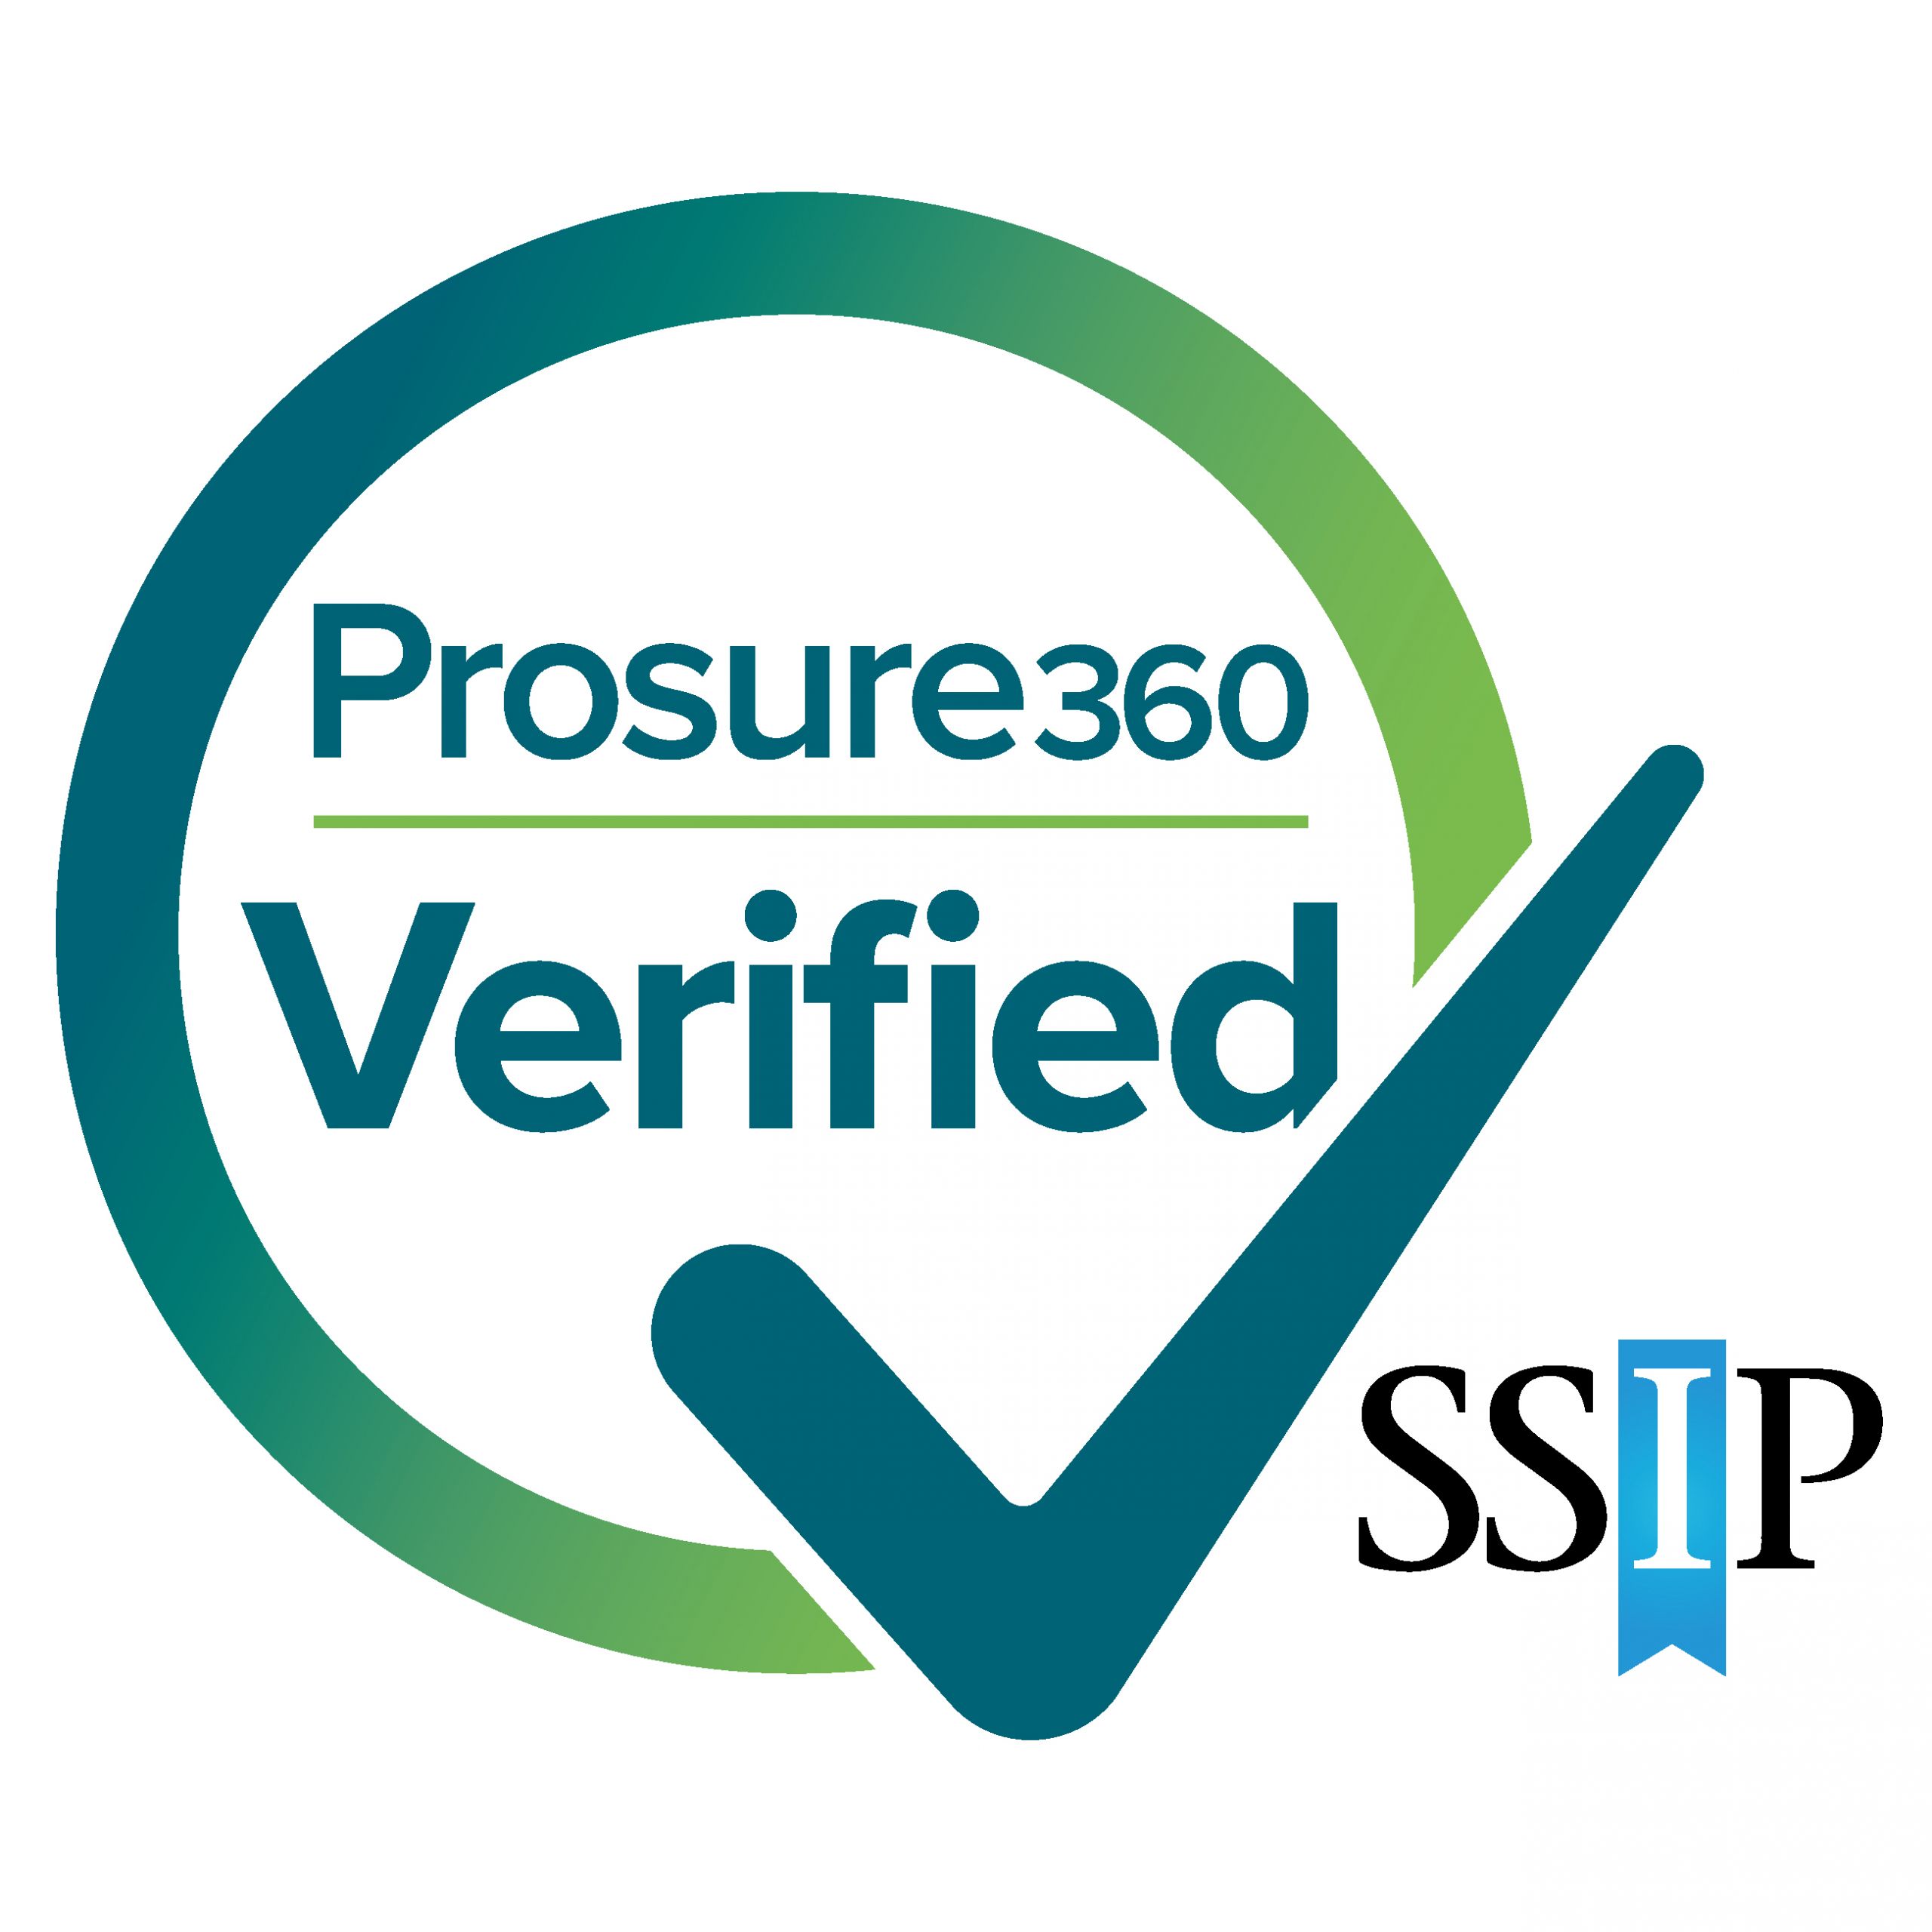 prosure 360 verified logo